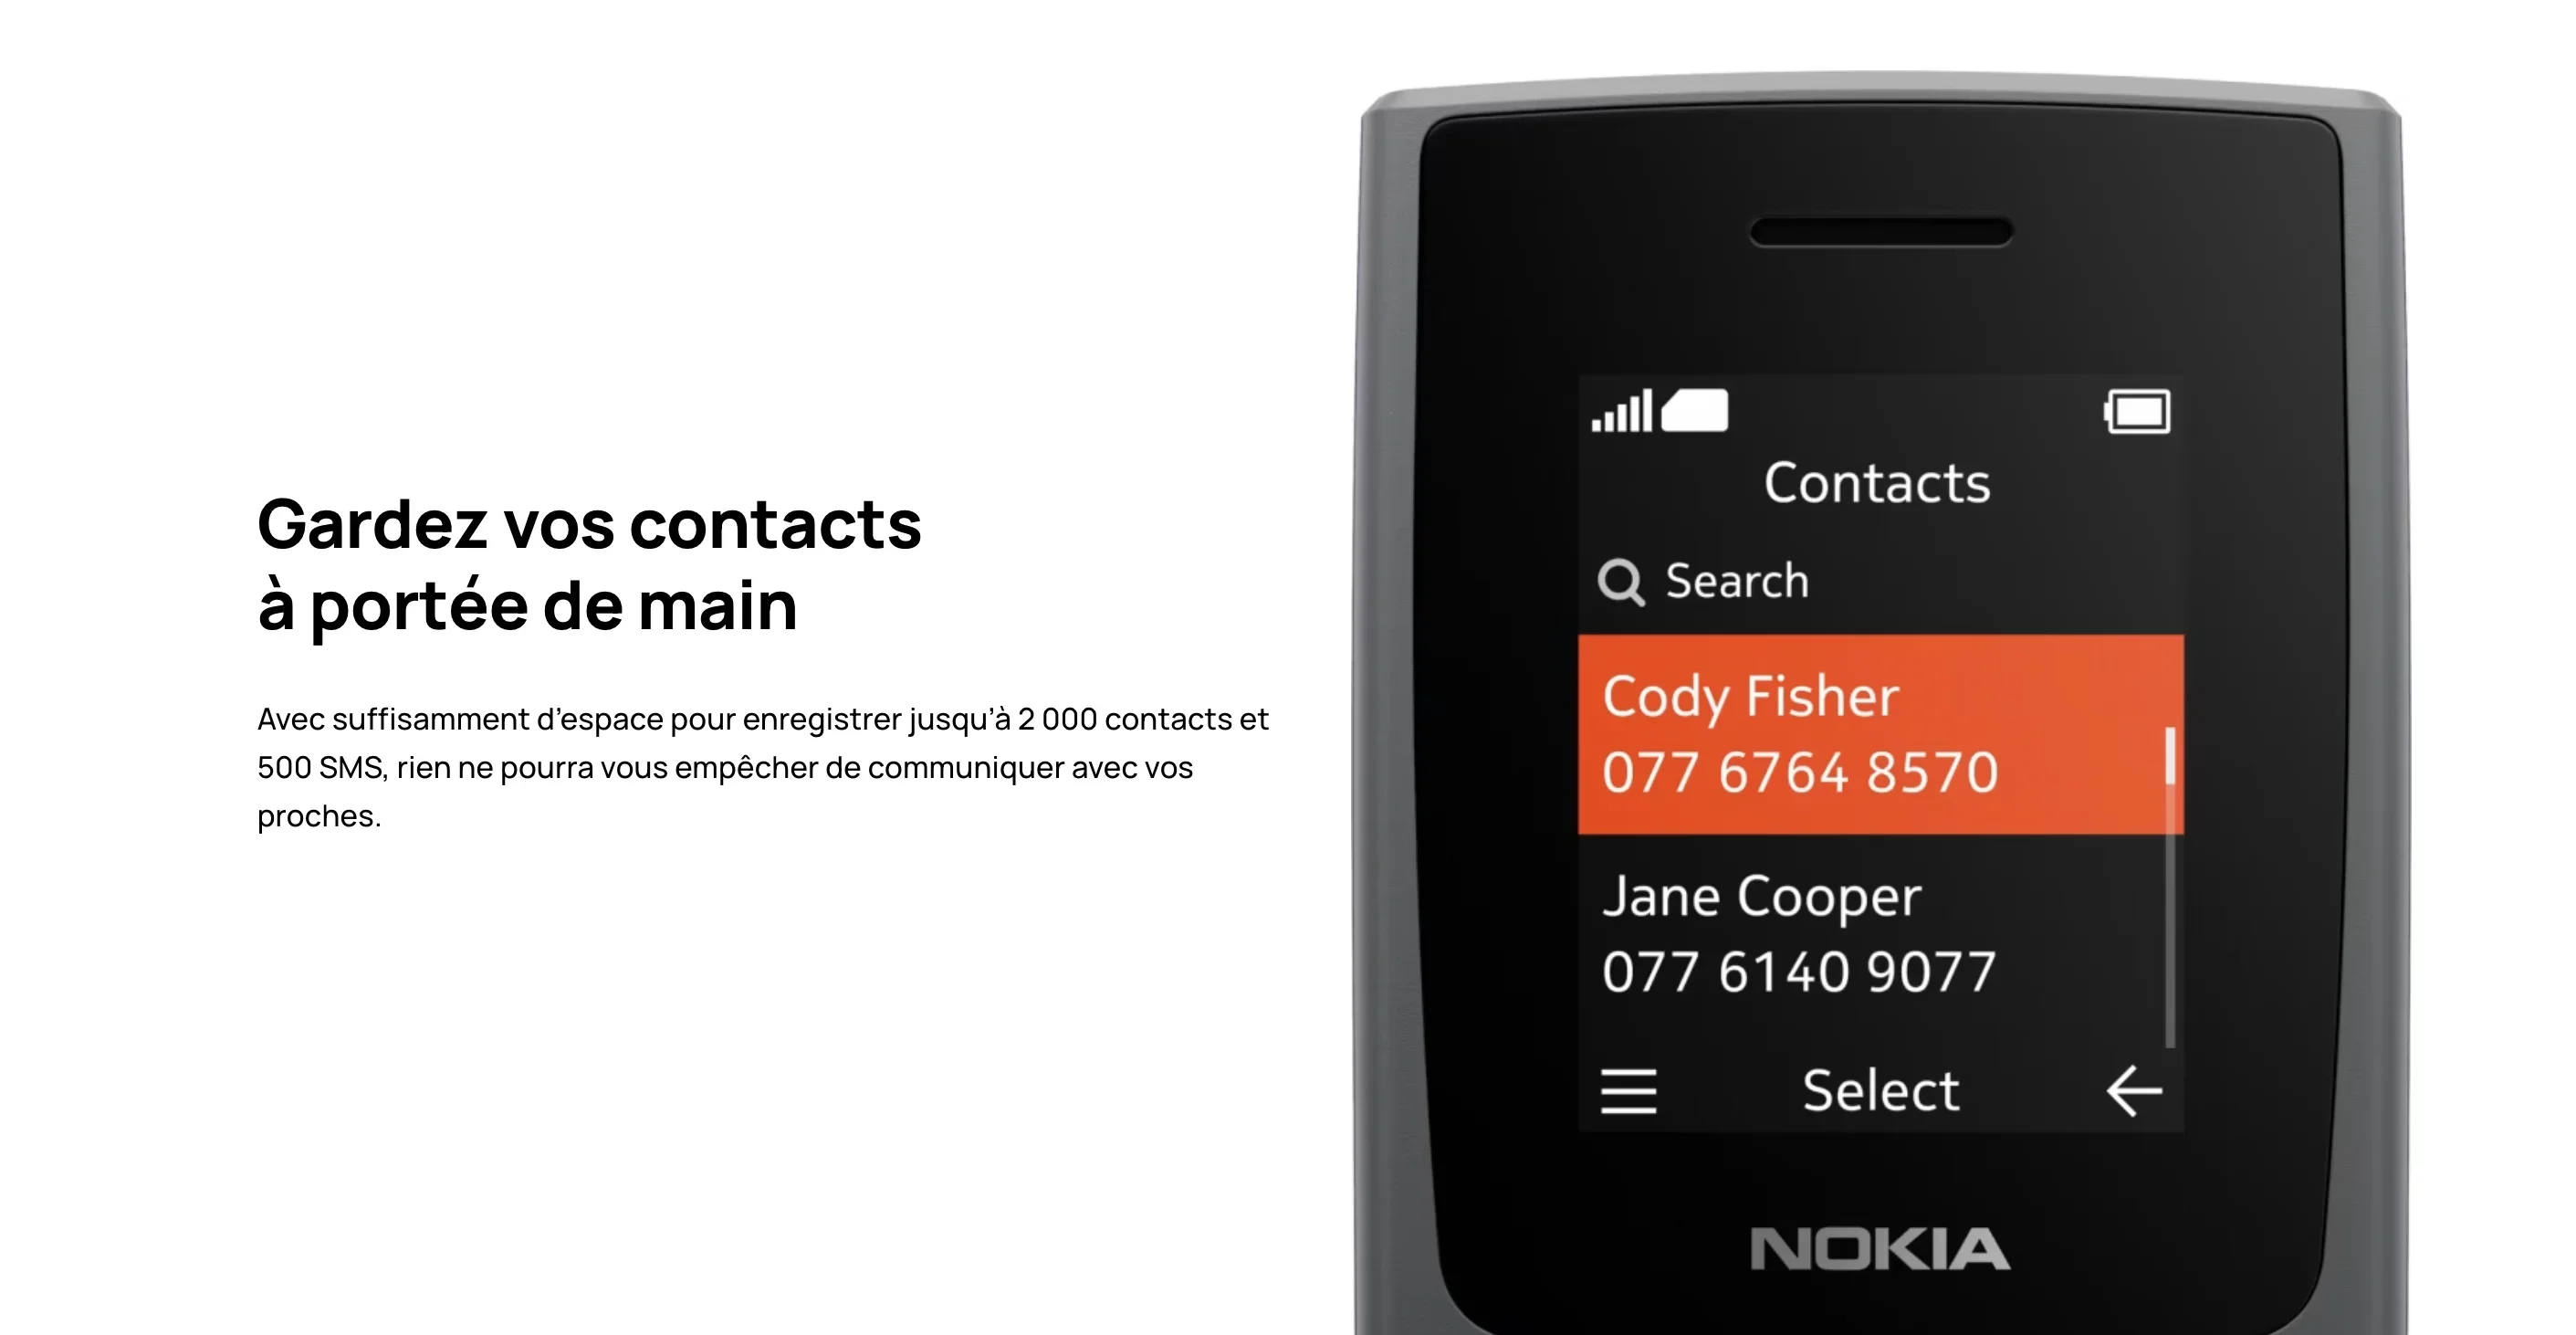 Interface du Nokia 105